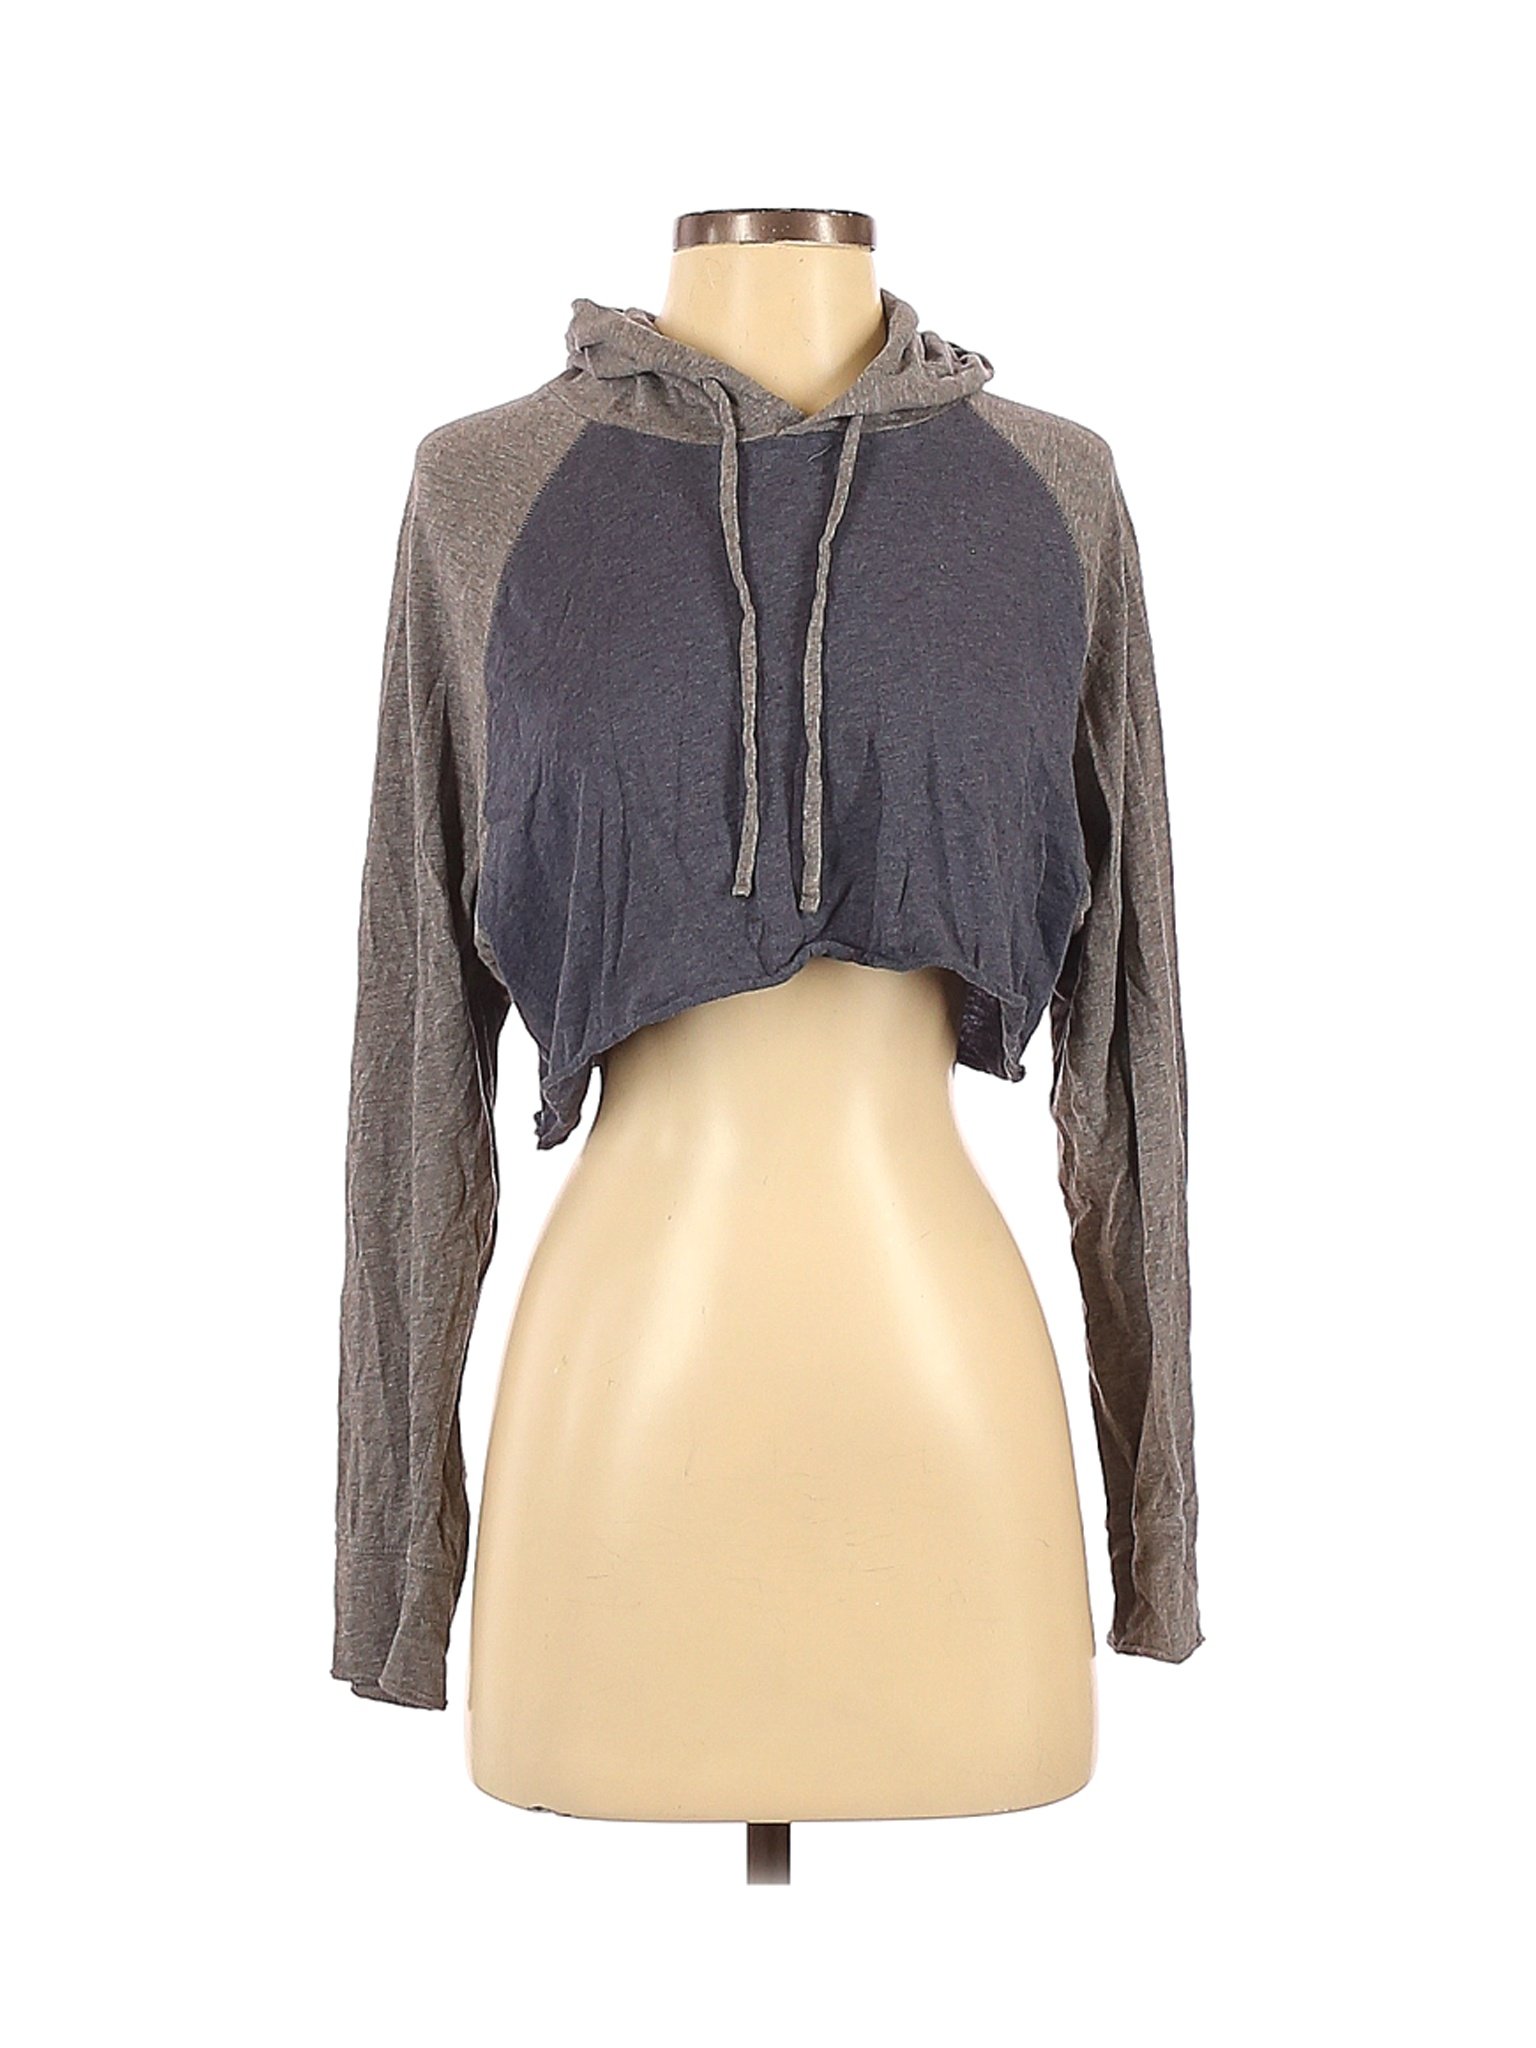 Gap Women Gray Pullover Hoodie S | eBay